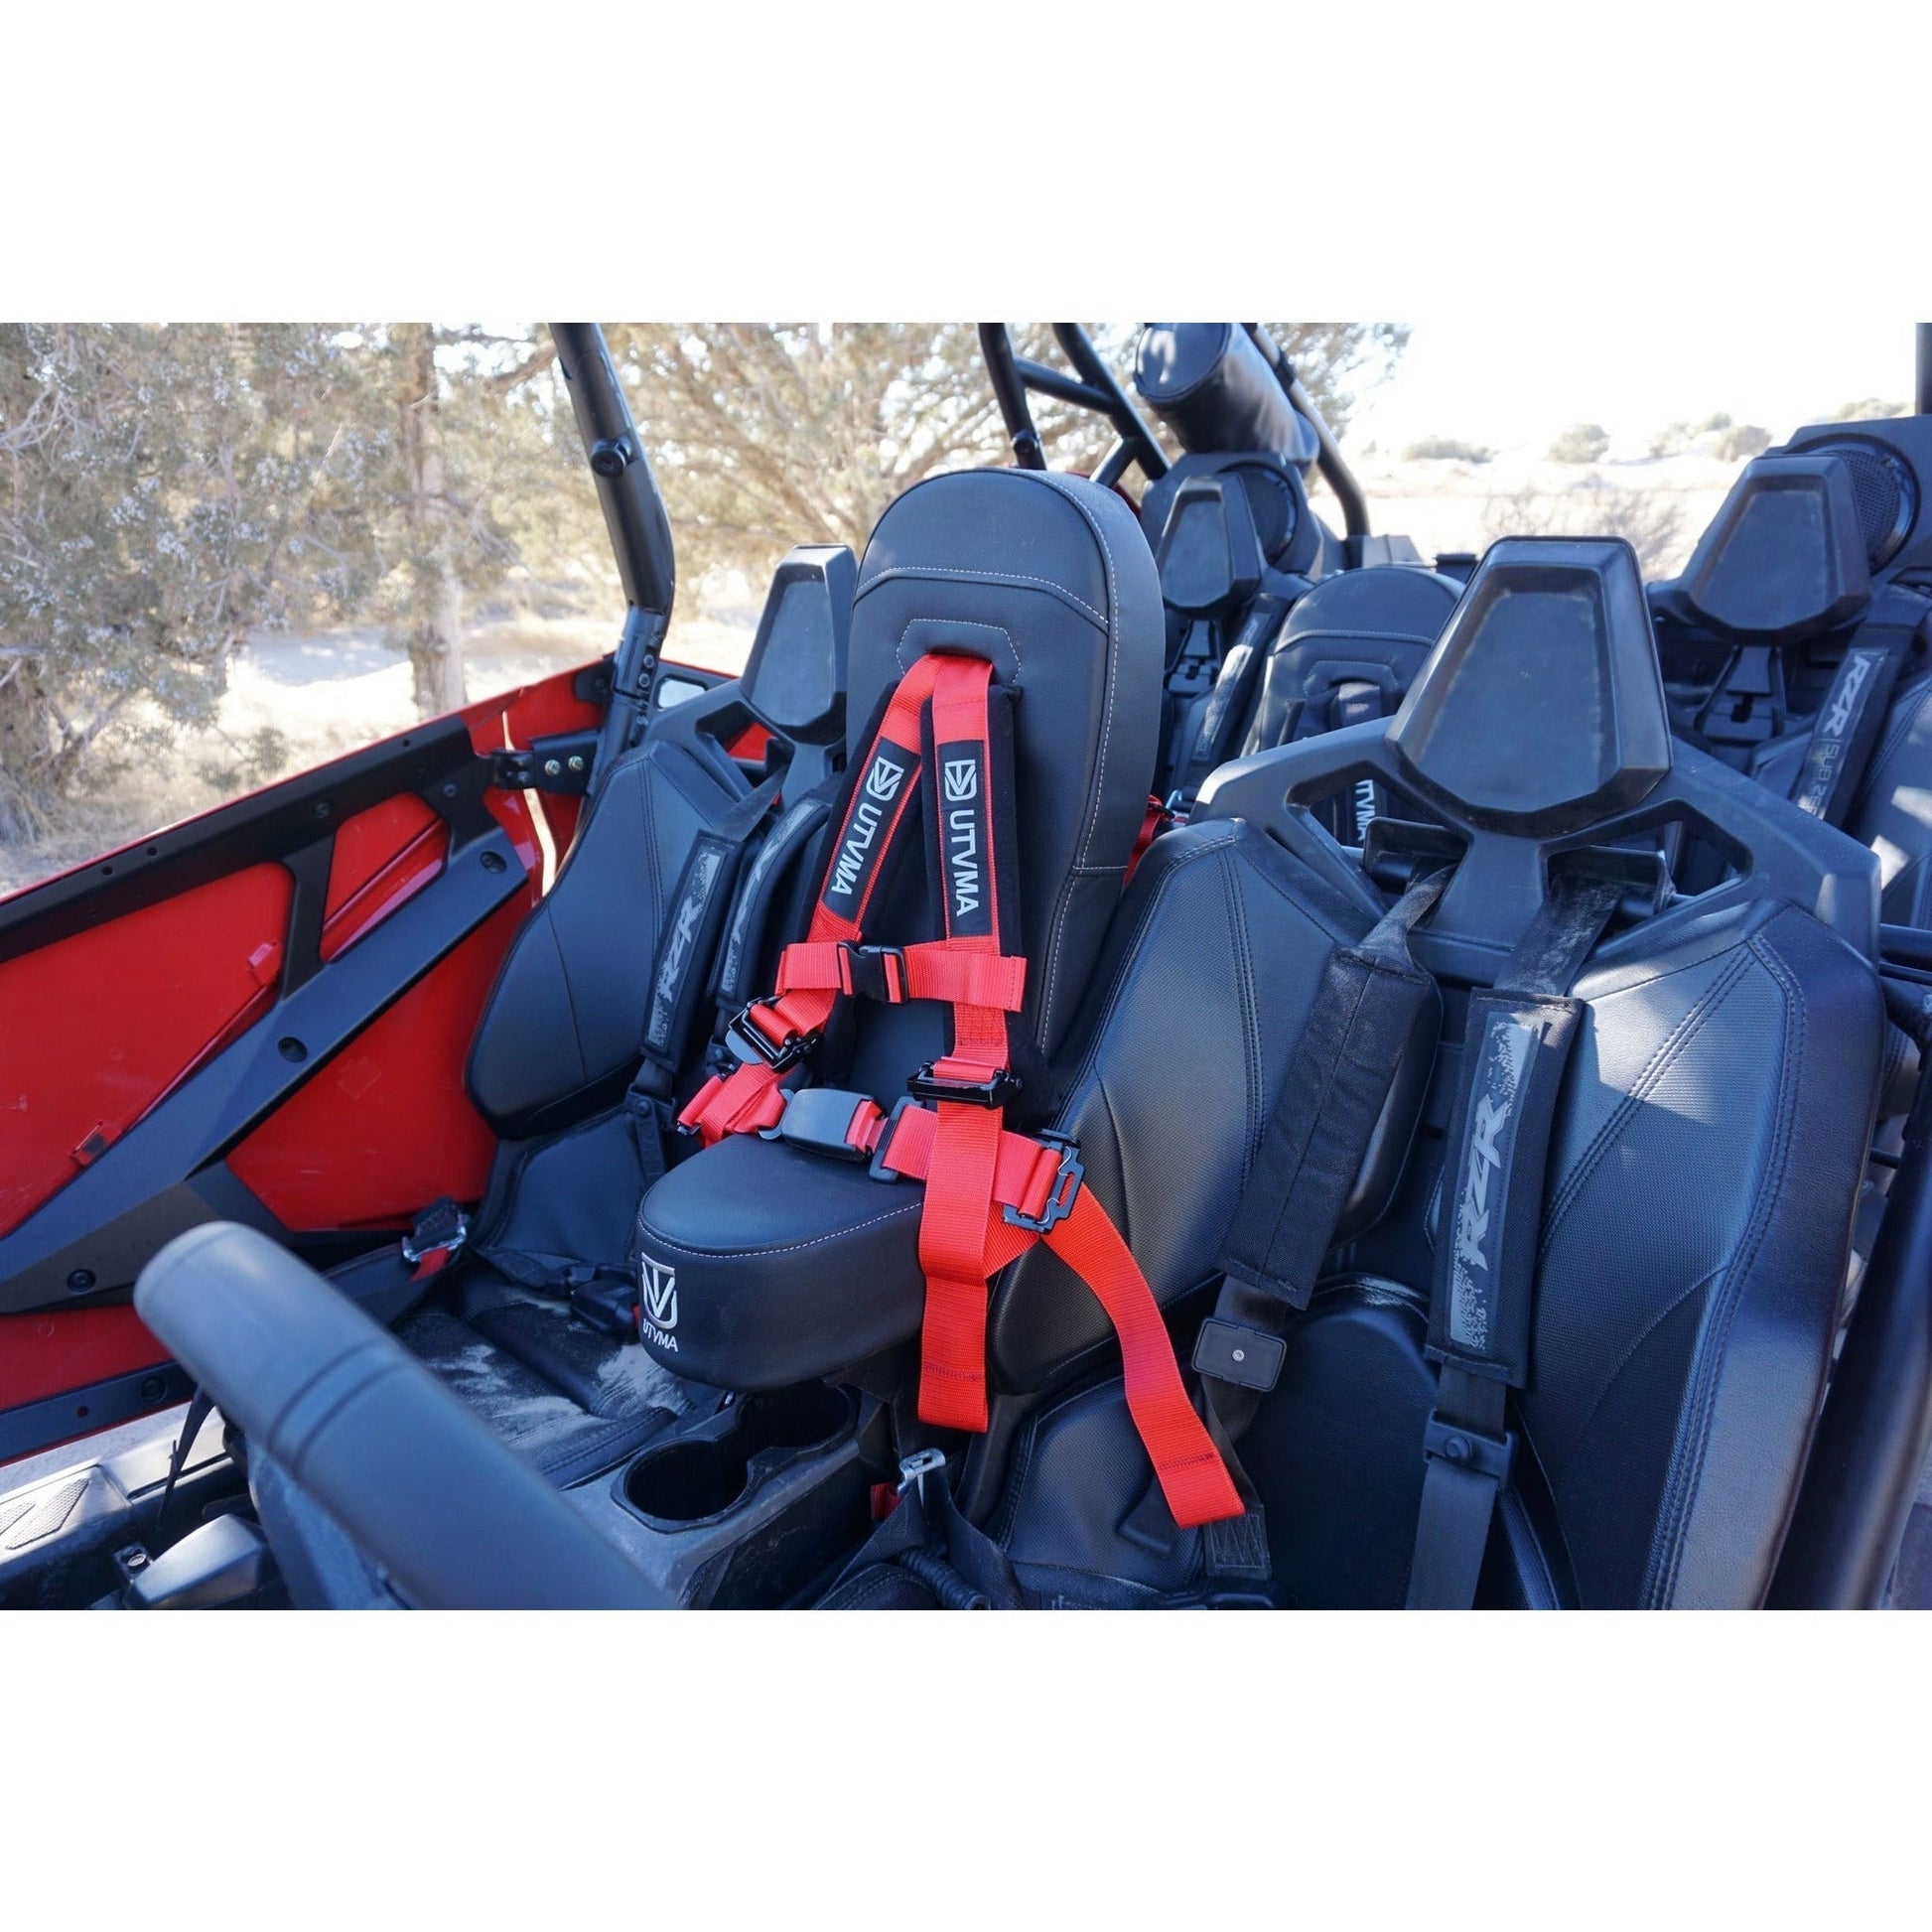 Polaris RZR Pro R Bump Seat with Harness